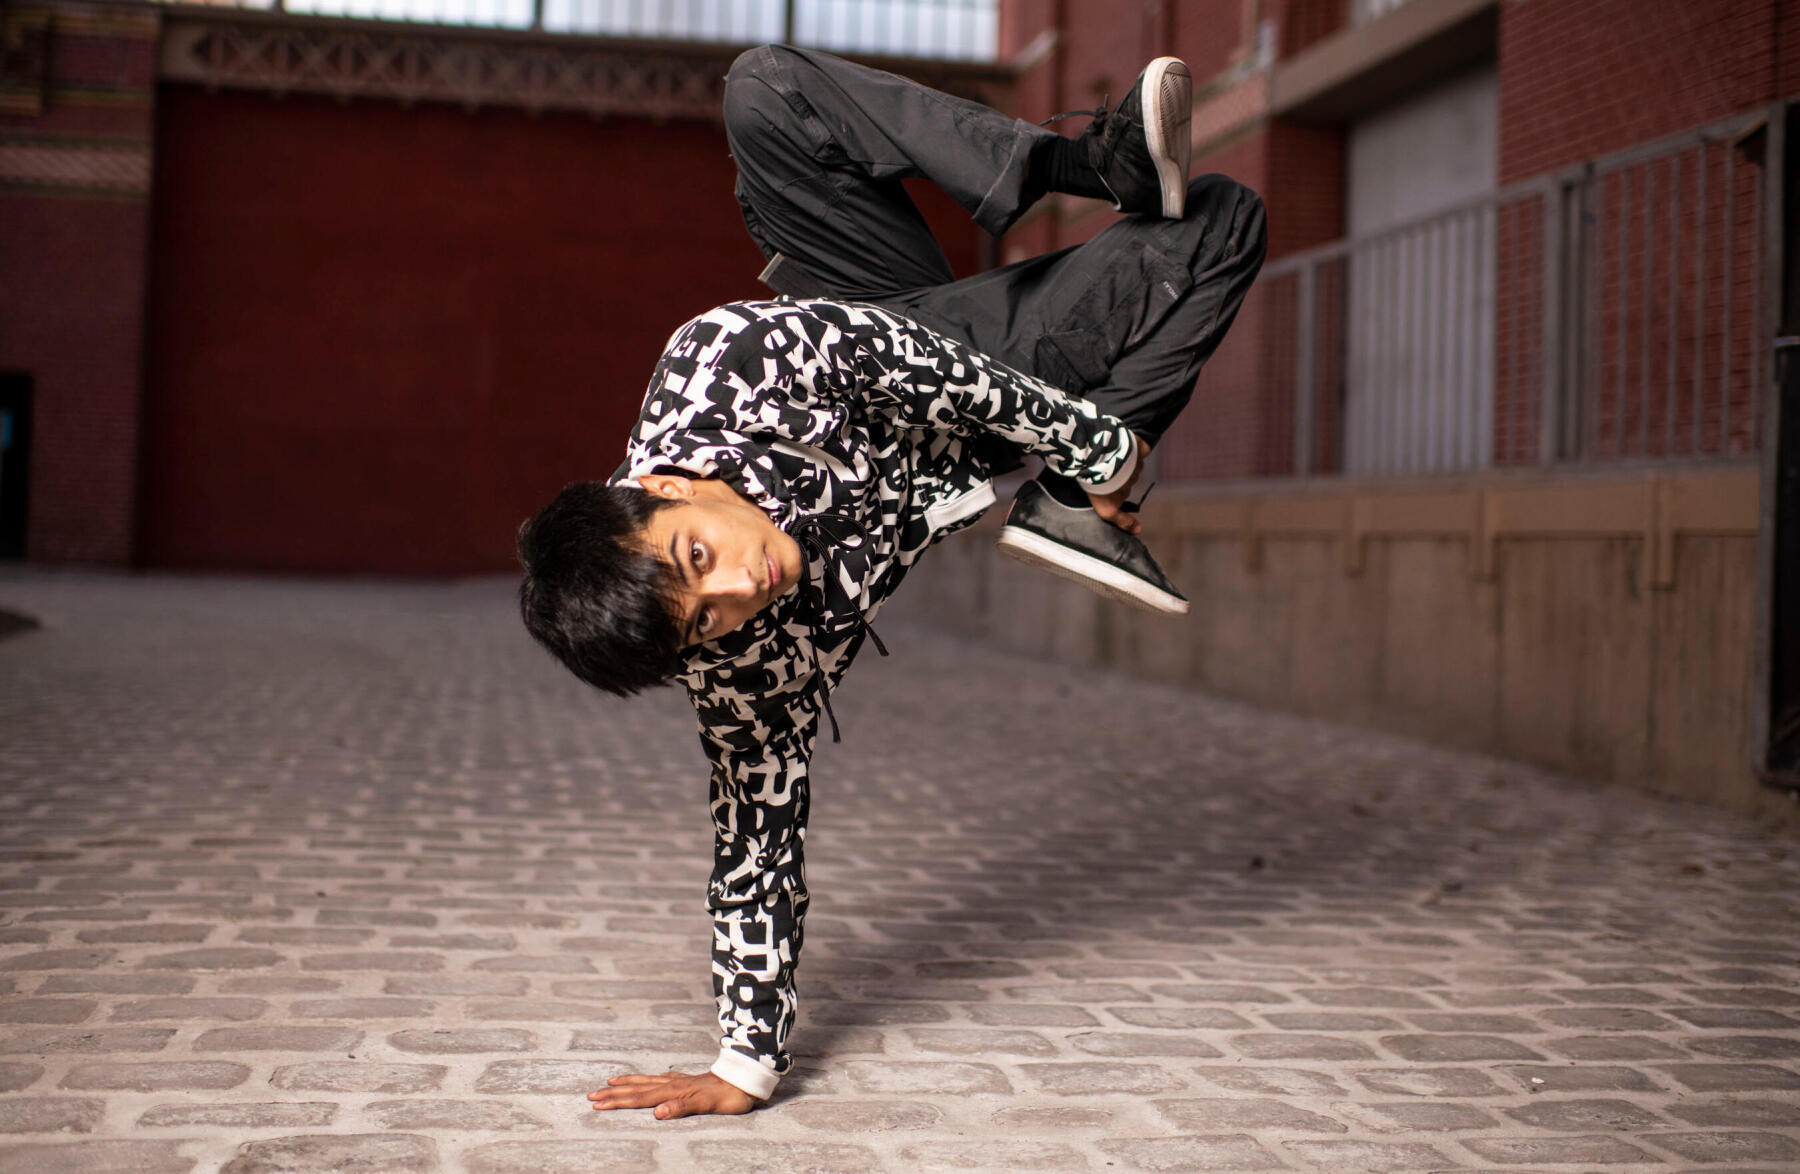 A boy presenting a dance choreography in an alley